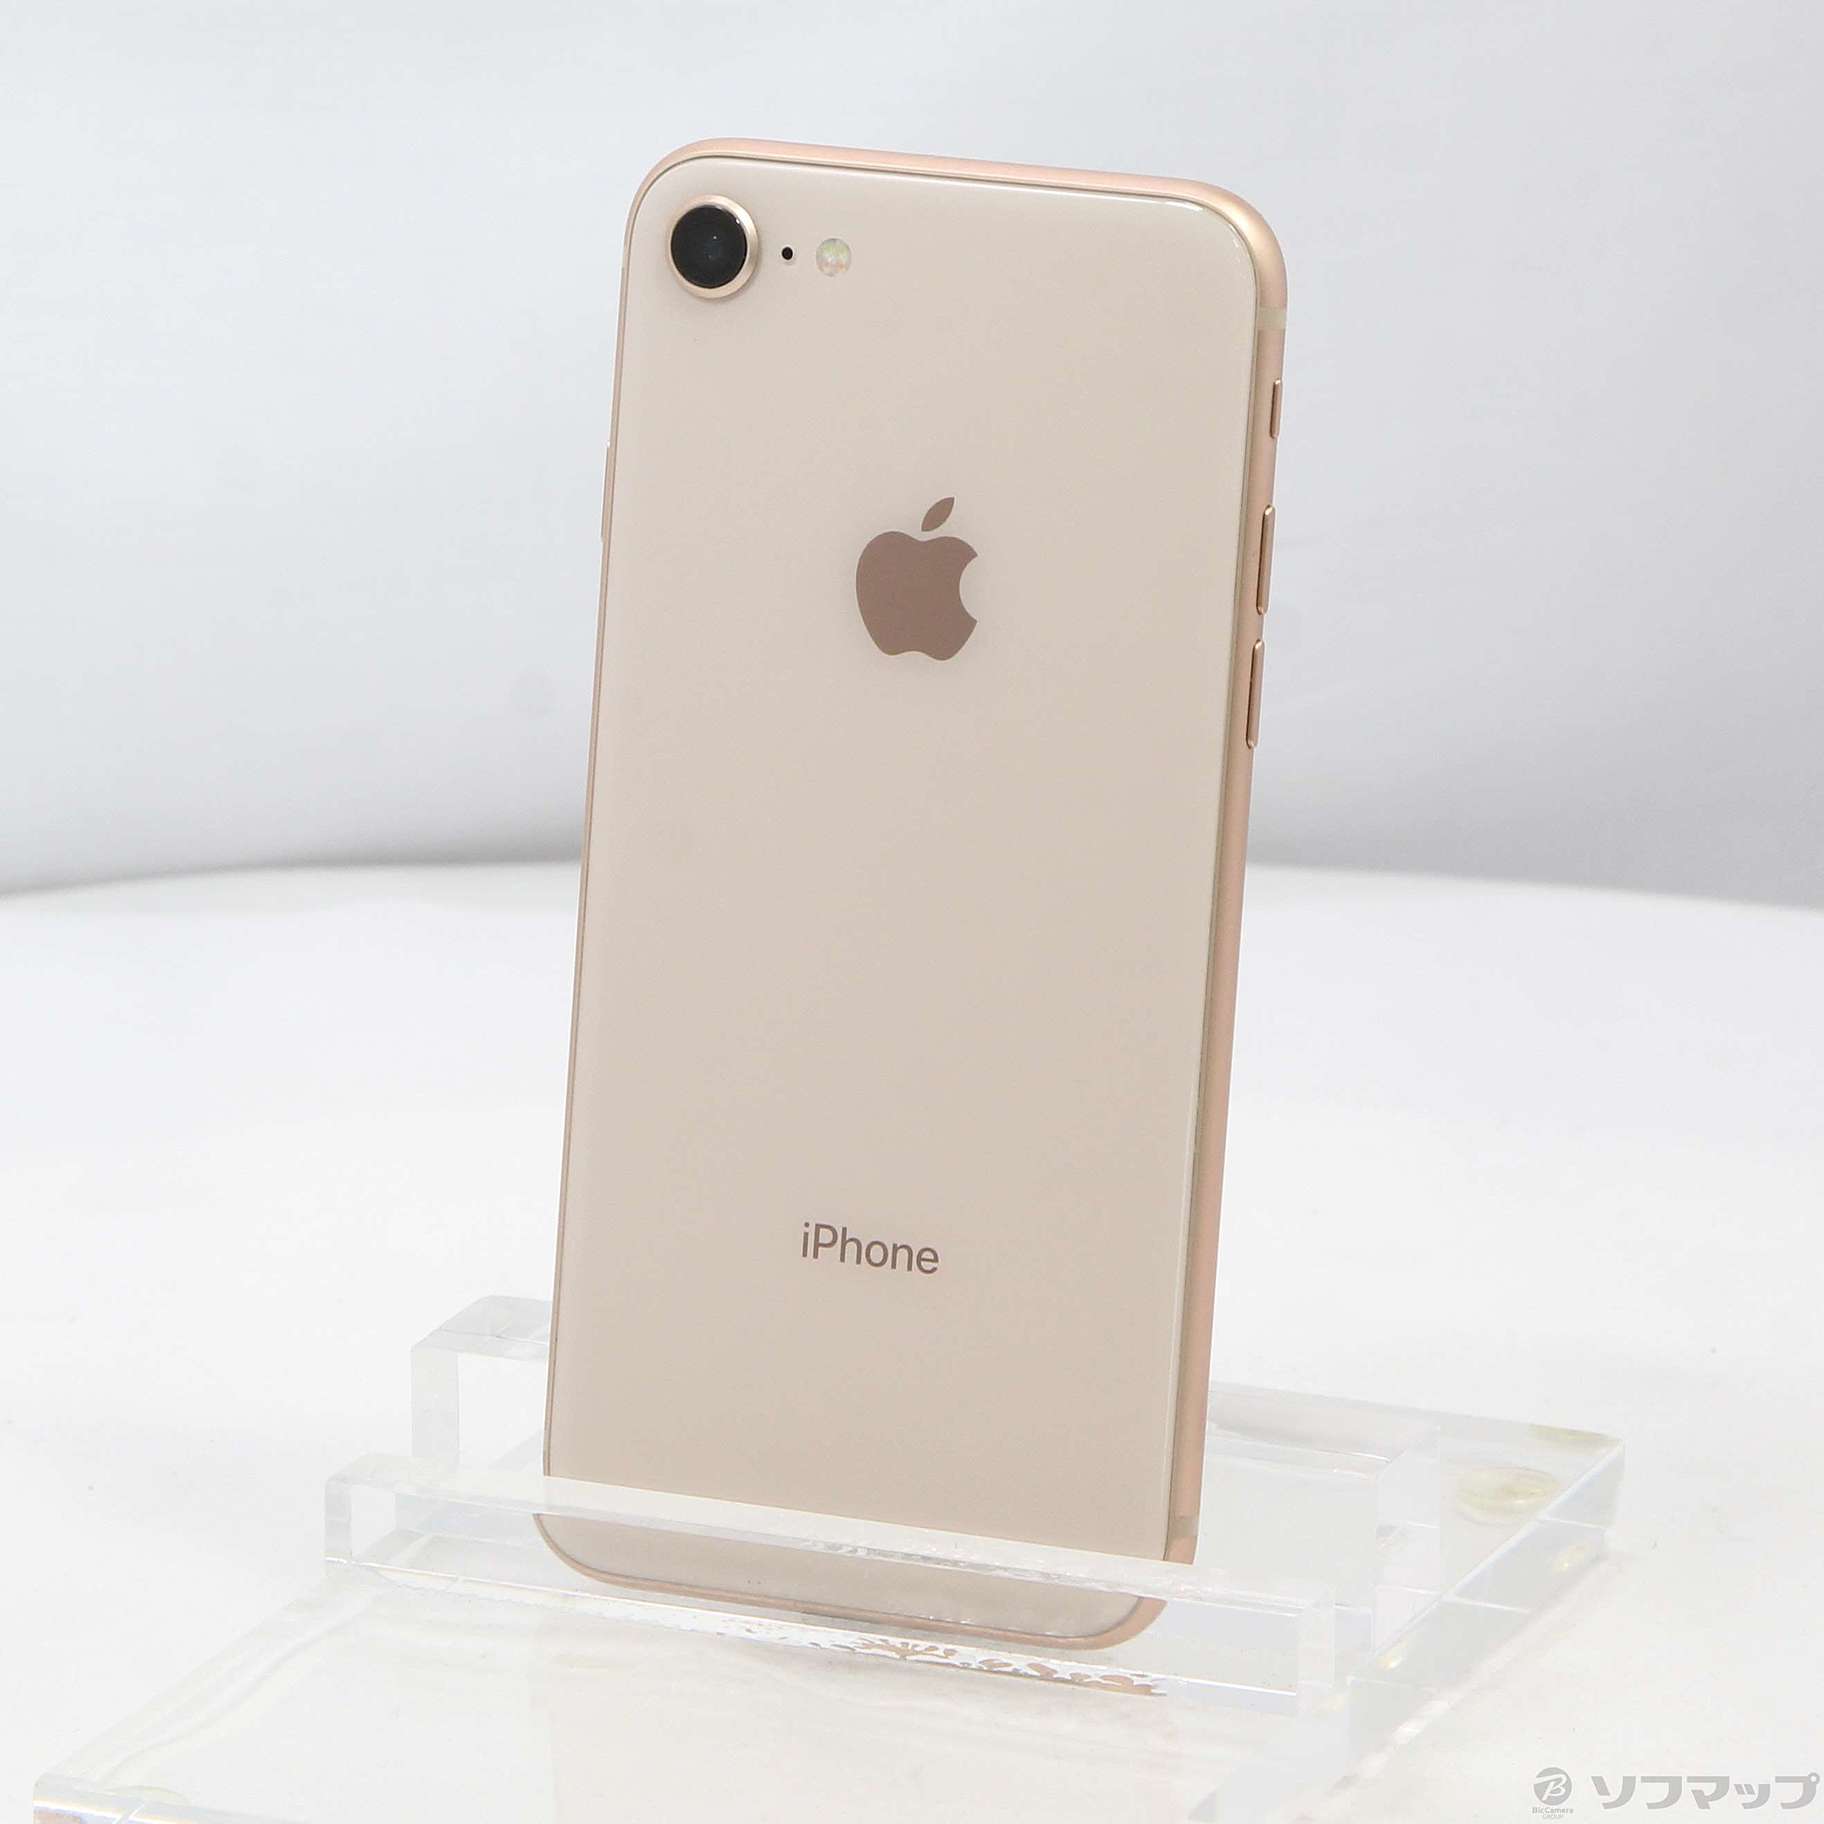 iPhone8 64GB Gold